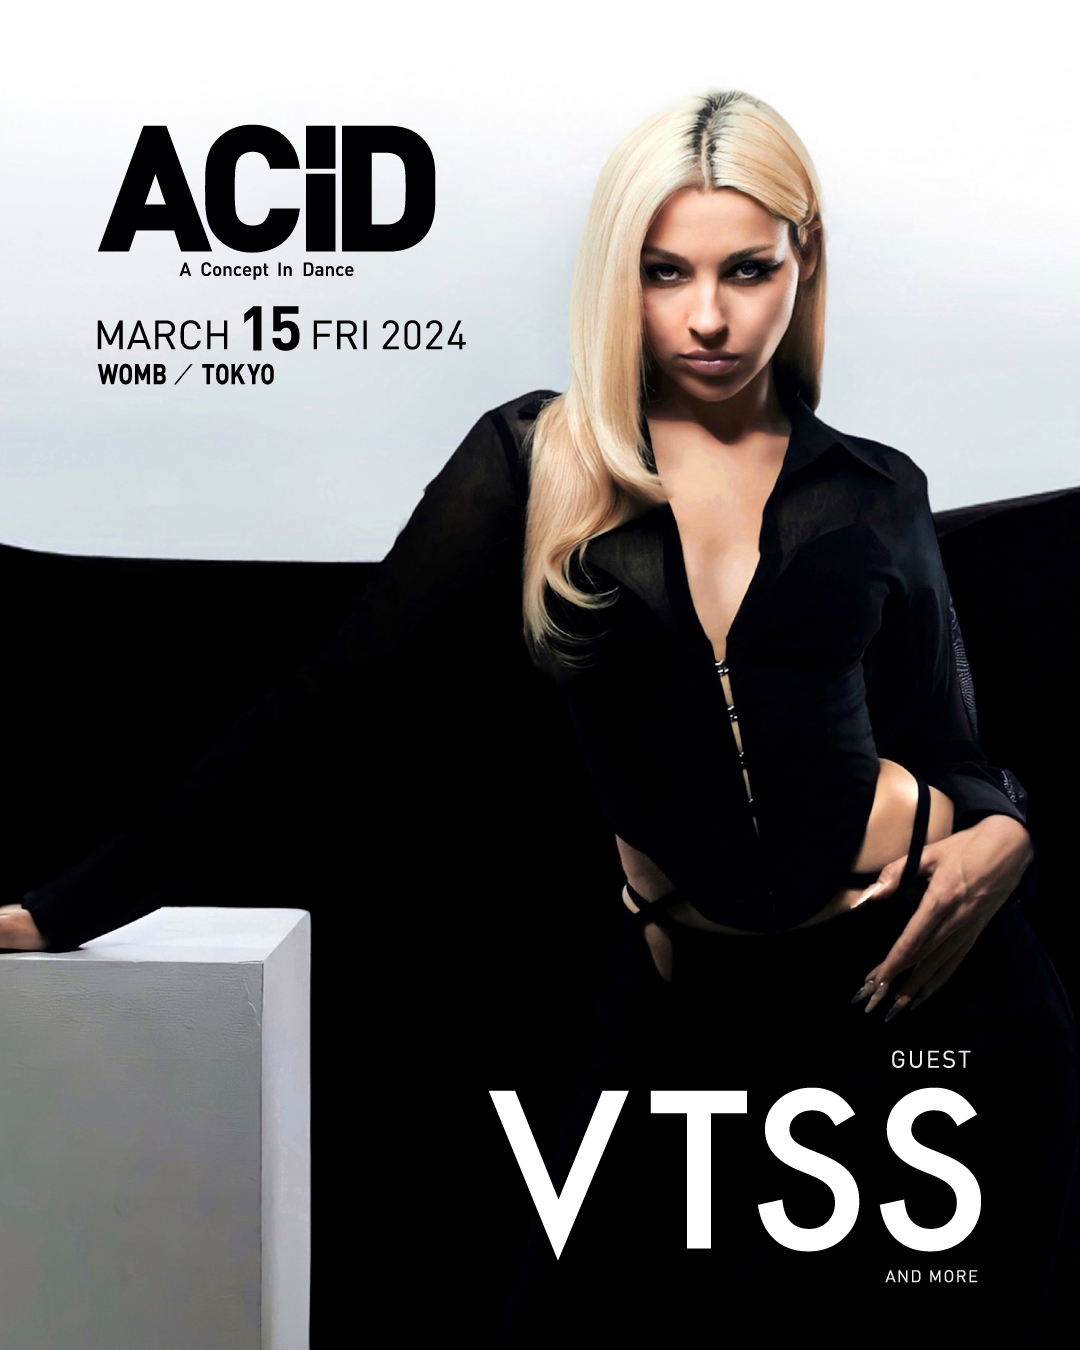 VTSSが3月に初来日 東京・渋谷 WOMB「ACiD: A Concept in Dance」に 